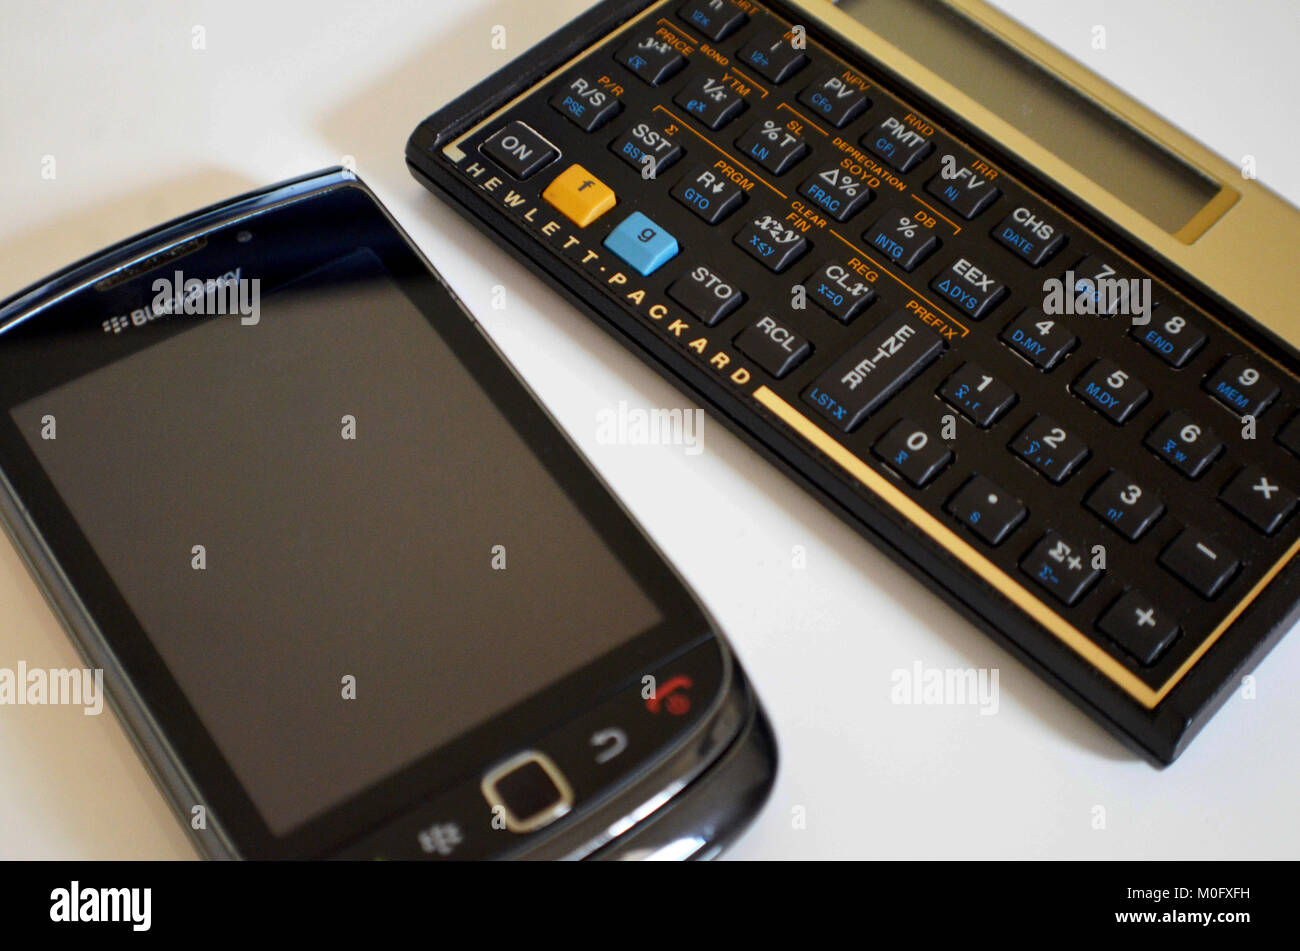 Blackberry phone and HP calculator Stock Photo